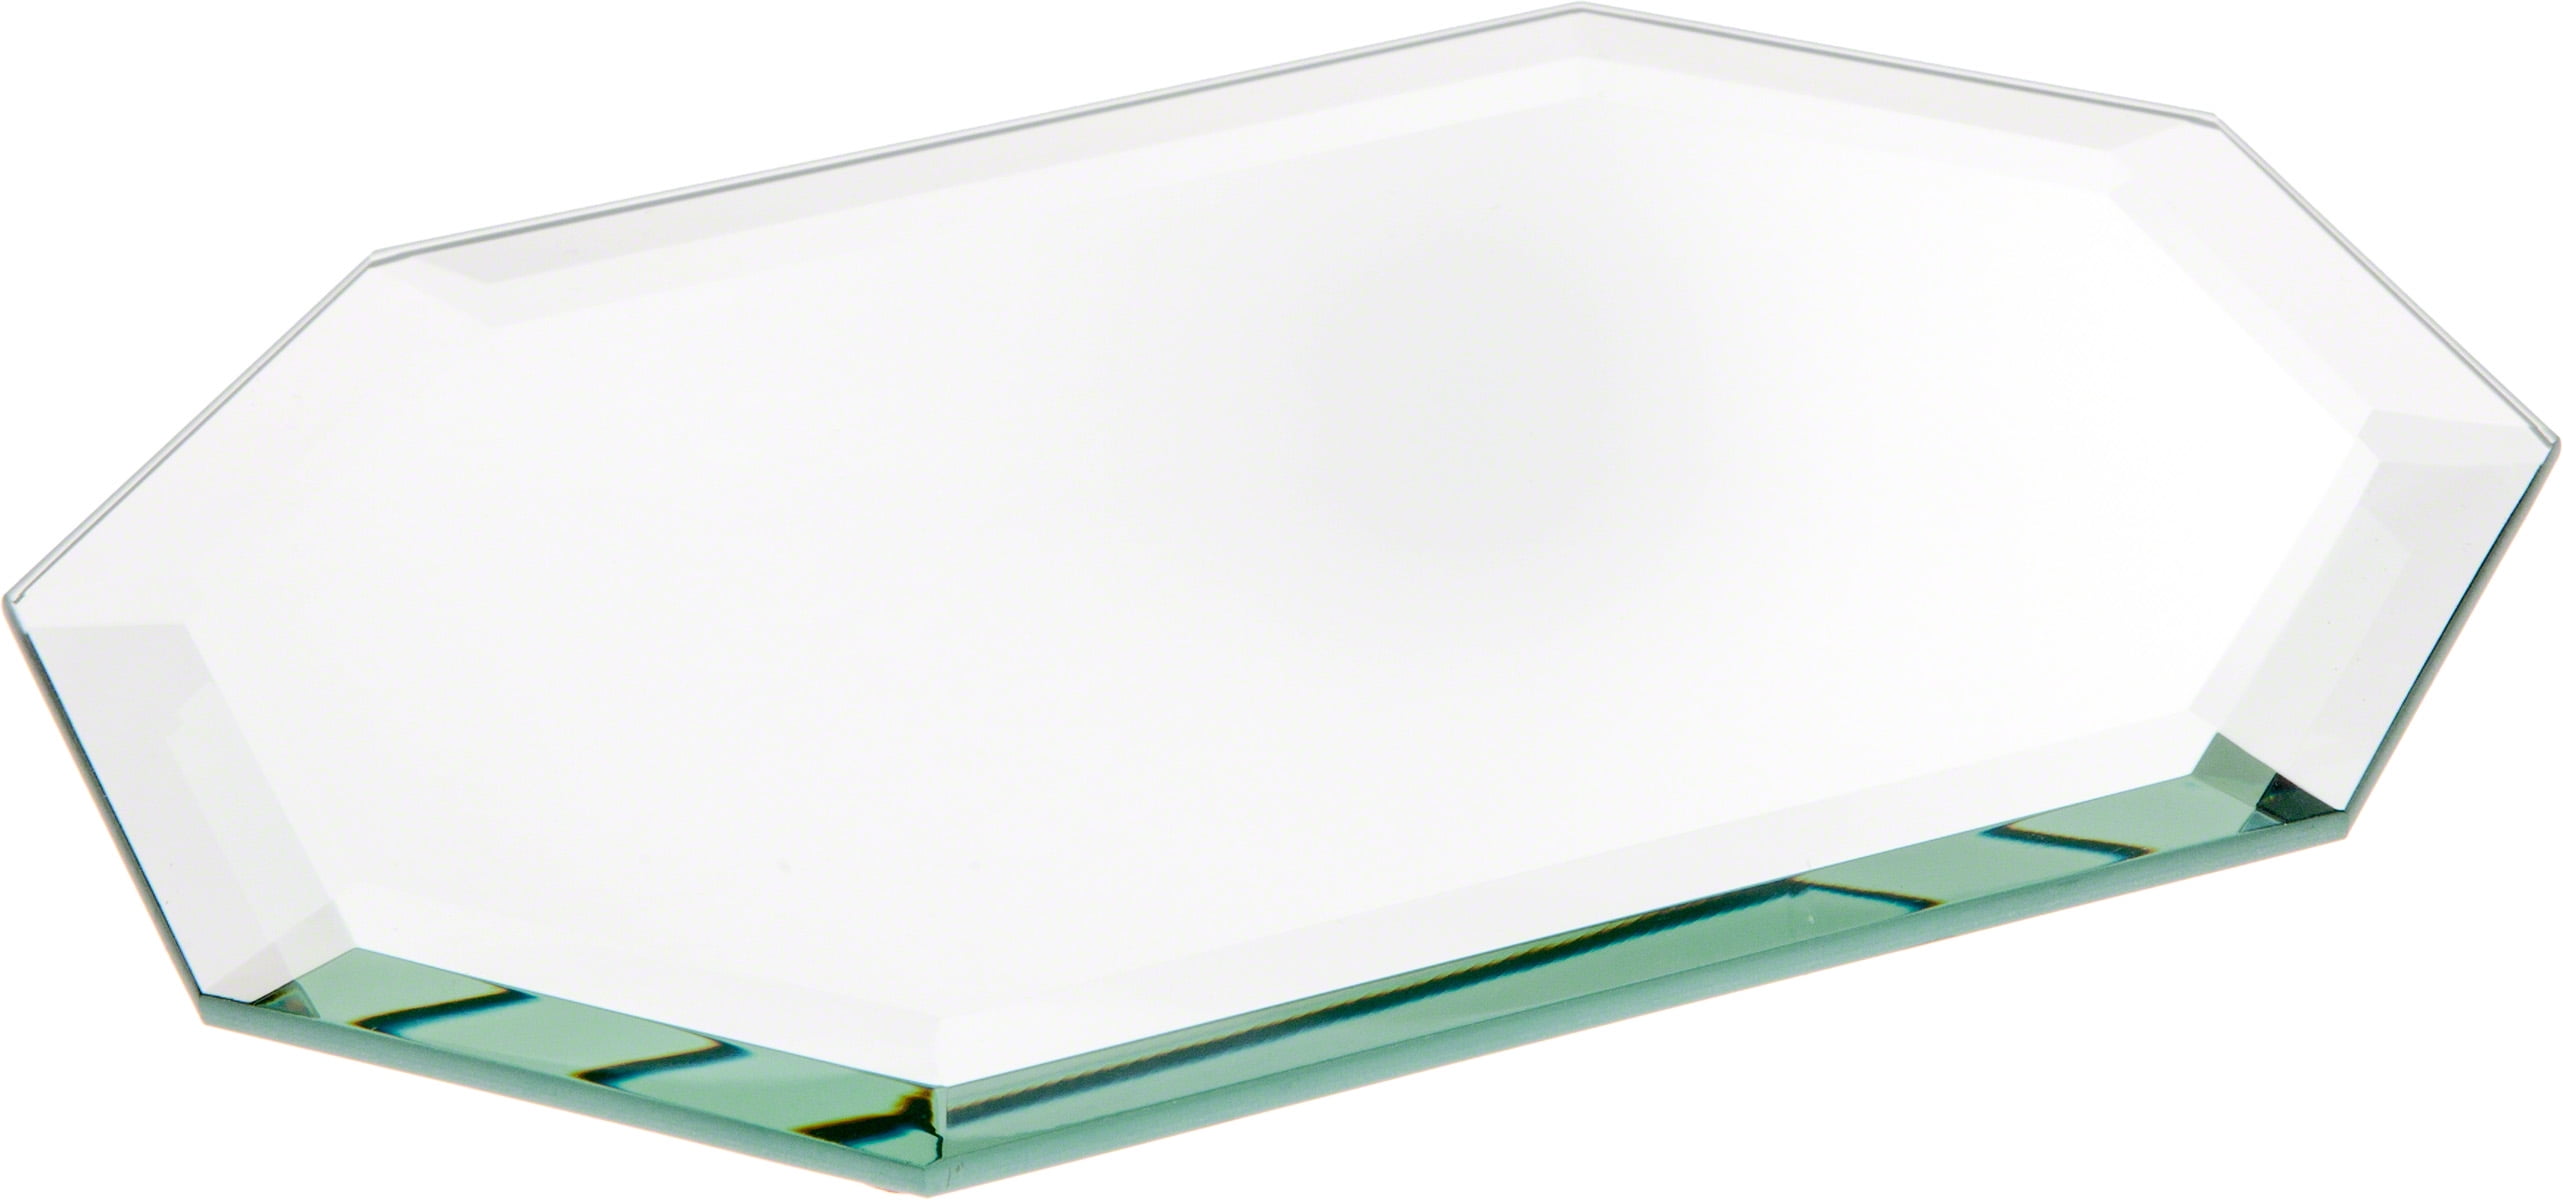 5 inch x 7 inch Plymor Long Octagon 5mm Beveled Glass Mirror 